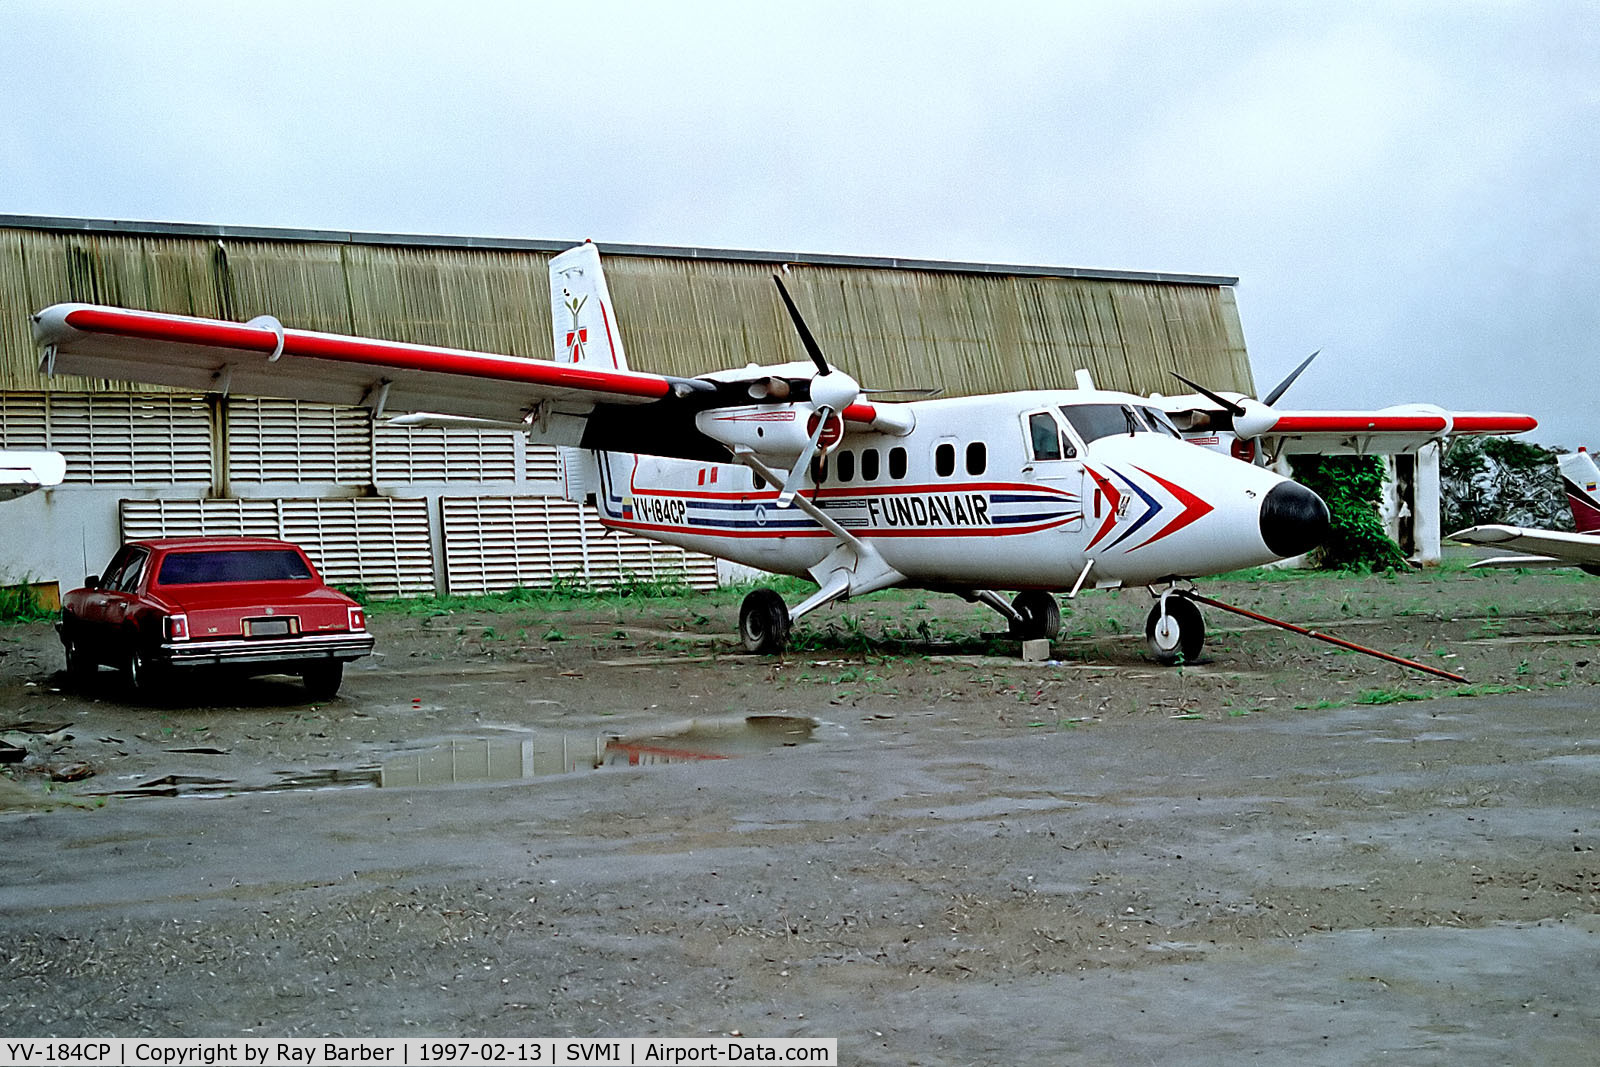 YV-184CP, 1978 De Havilland Canada DHC-6-300 Twin Otter C/N 557, YV-184CP   De Havilland Canada DHC-6-300 Twin Otter [557] (Fundavair) Caracas-Simon Bolivar Int'l 13/02/1997